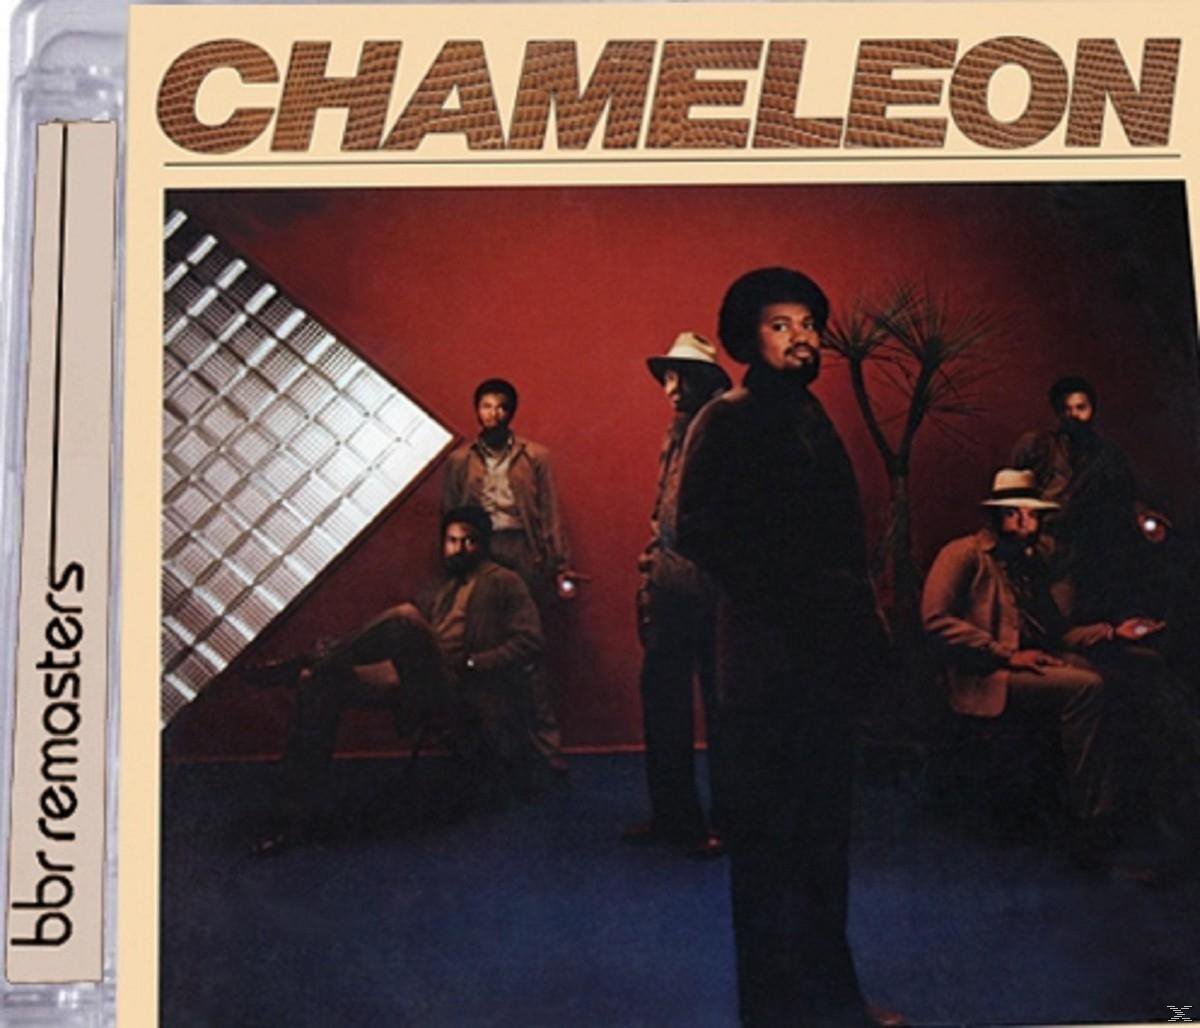 - Cameleon Chameleon - Edition) (CD) (Remastered+Expanded